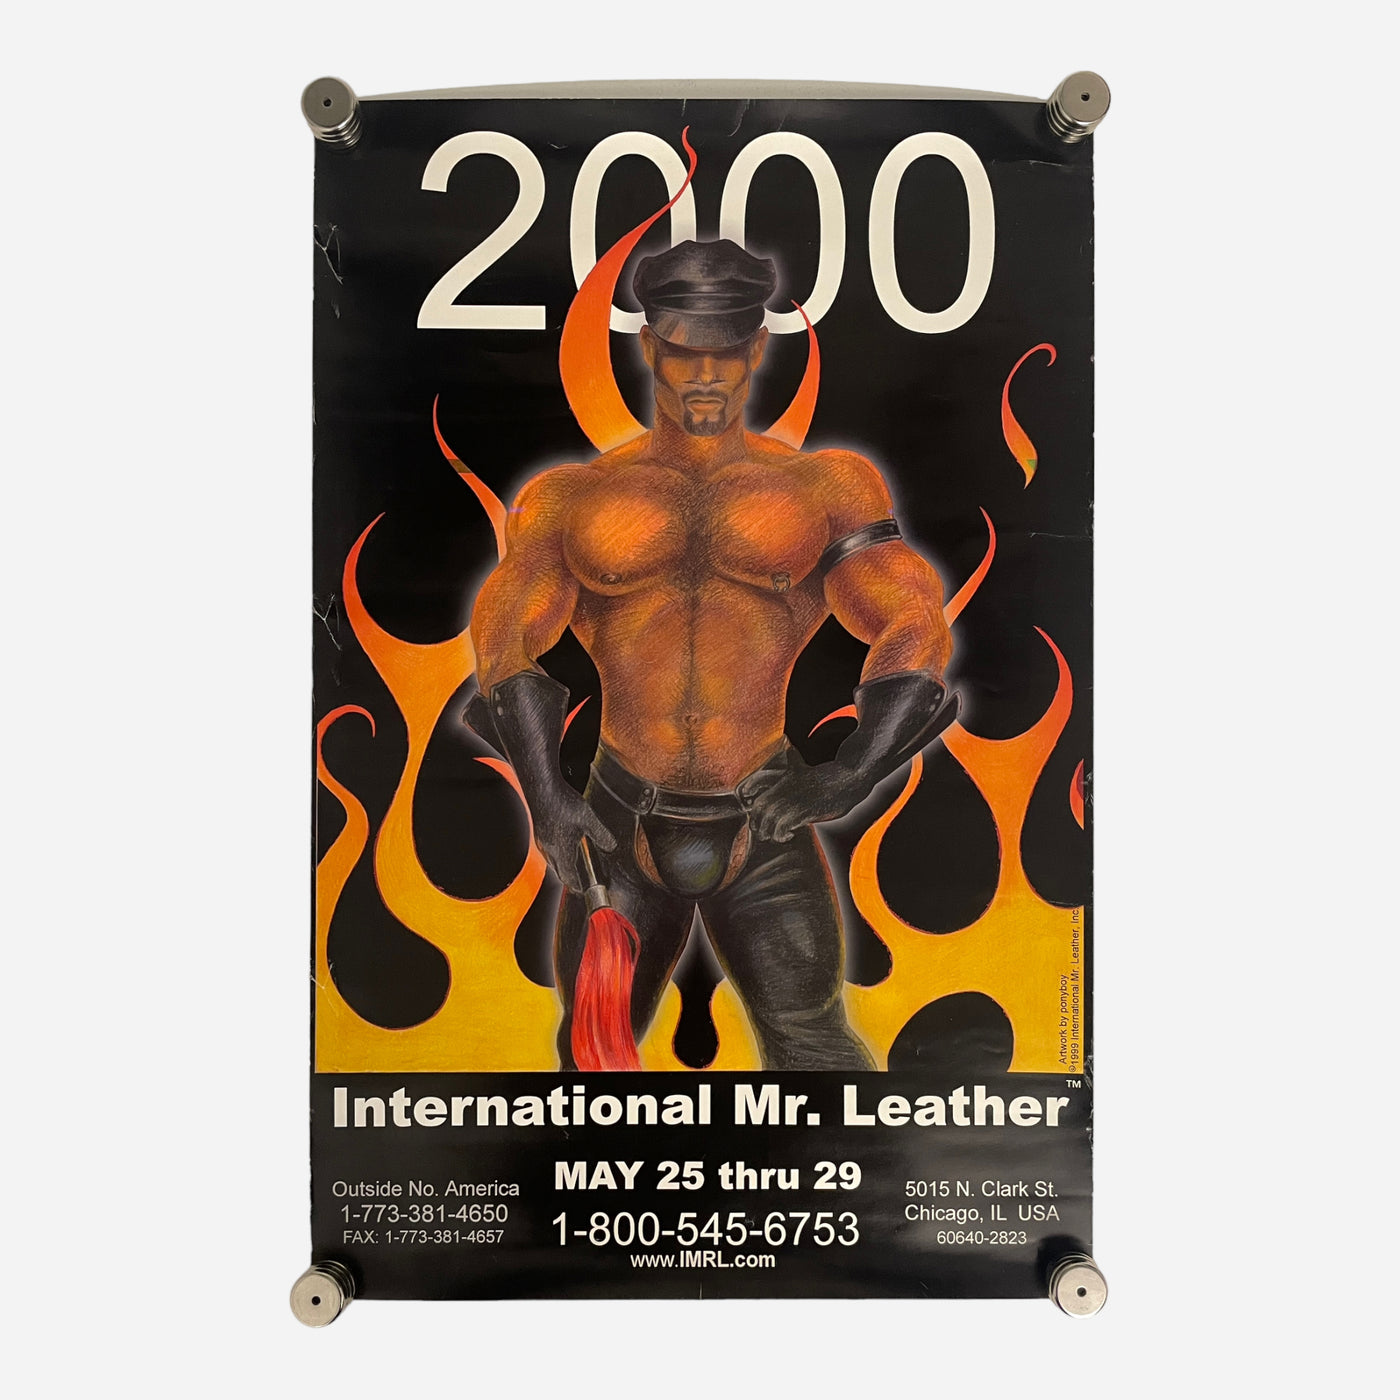 2000 INTERNATIONAL MR LEATHER POSTER